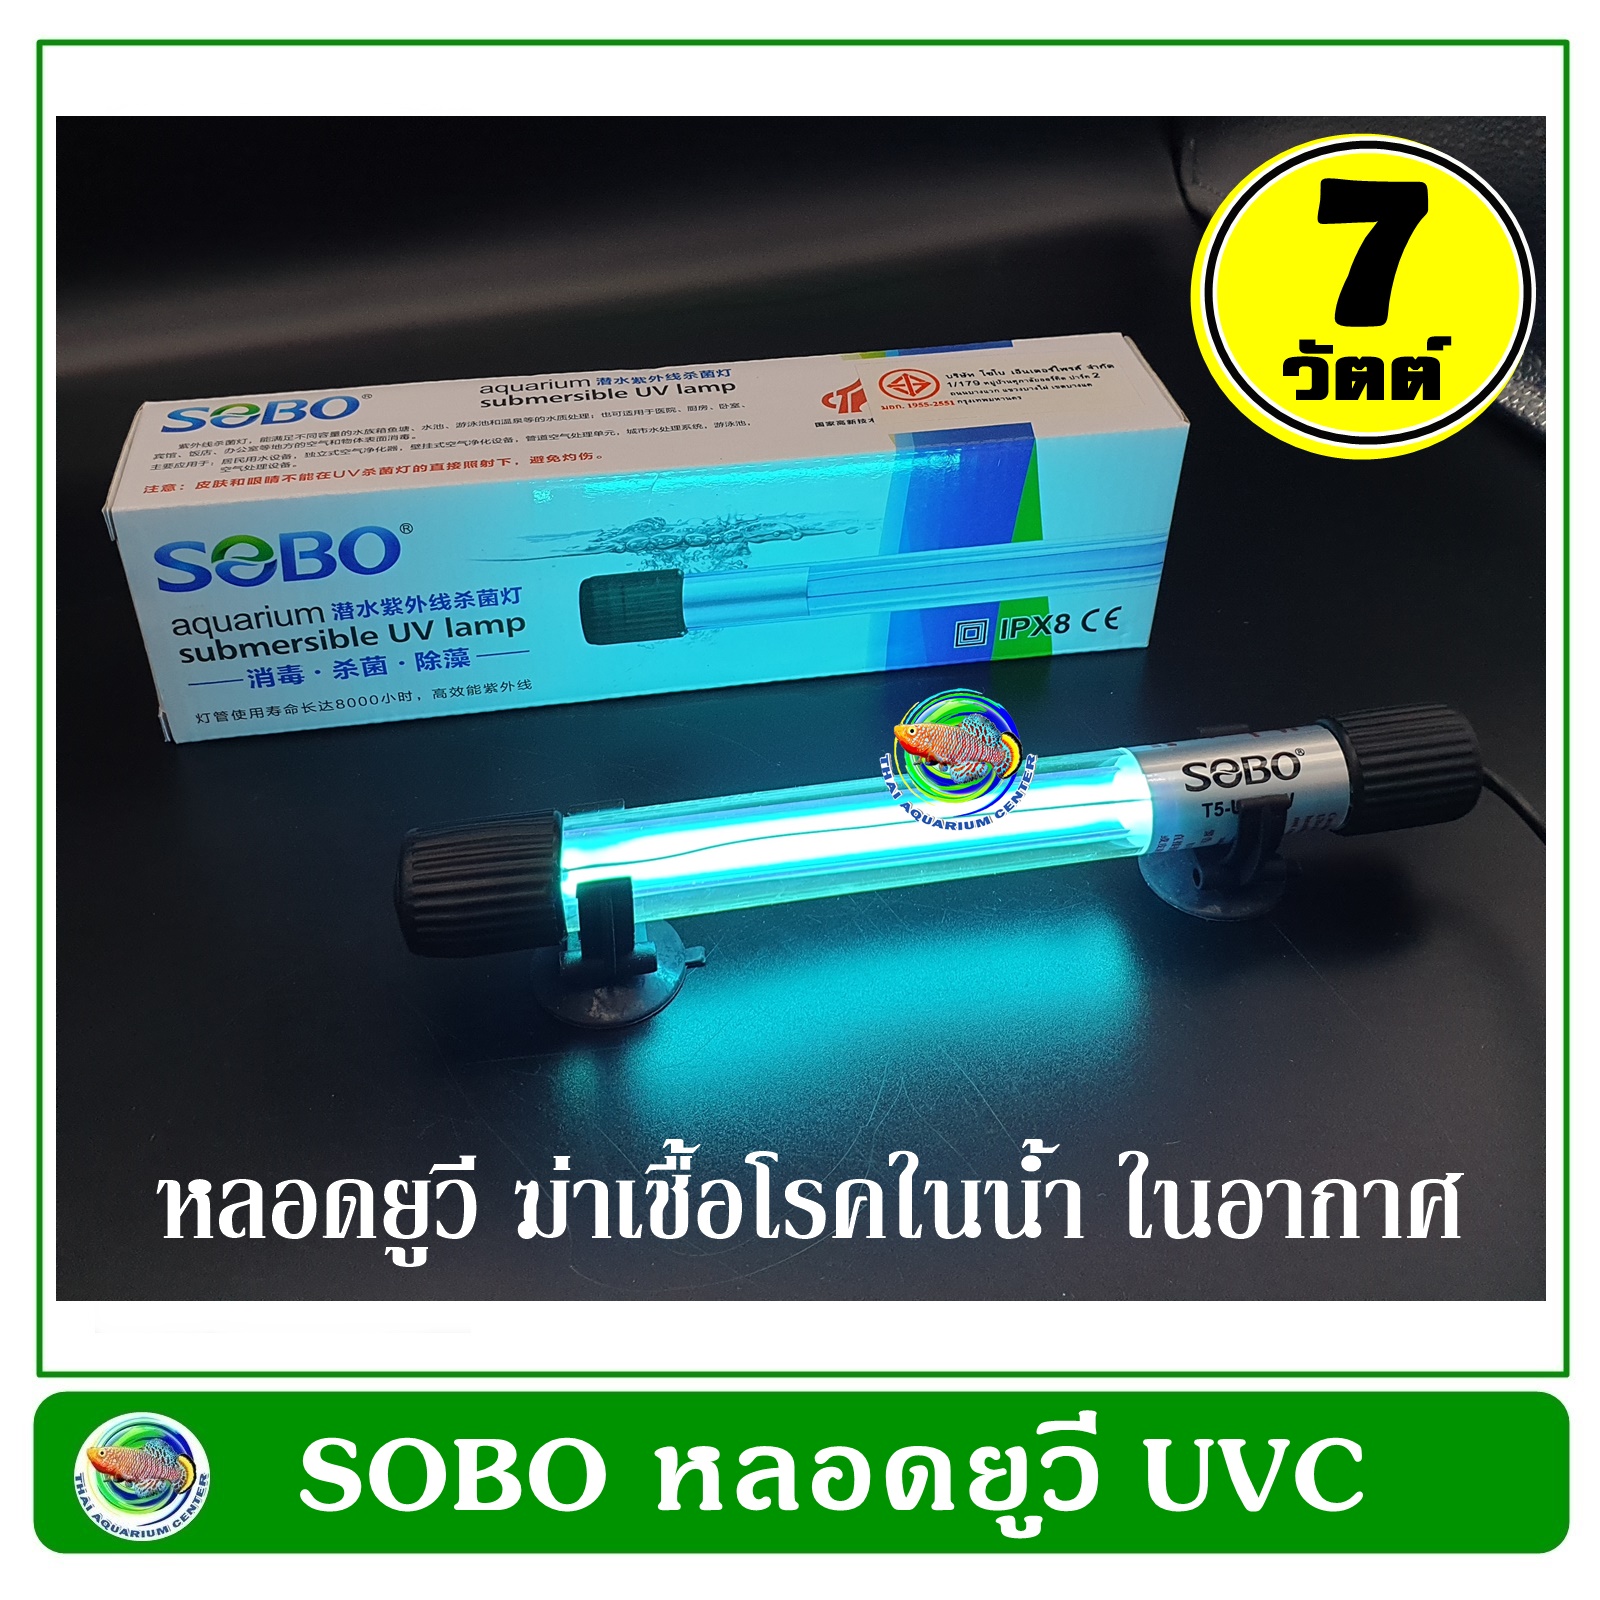 SOBO UV 7 W หลอดยูวี ฆ่าเชื้อโรค กำจัดตะไคร่เขียว ขนาด 7 วัตต์ UVC UV Sterilizer